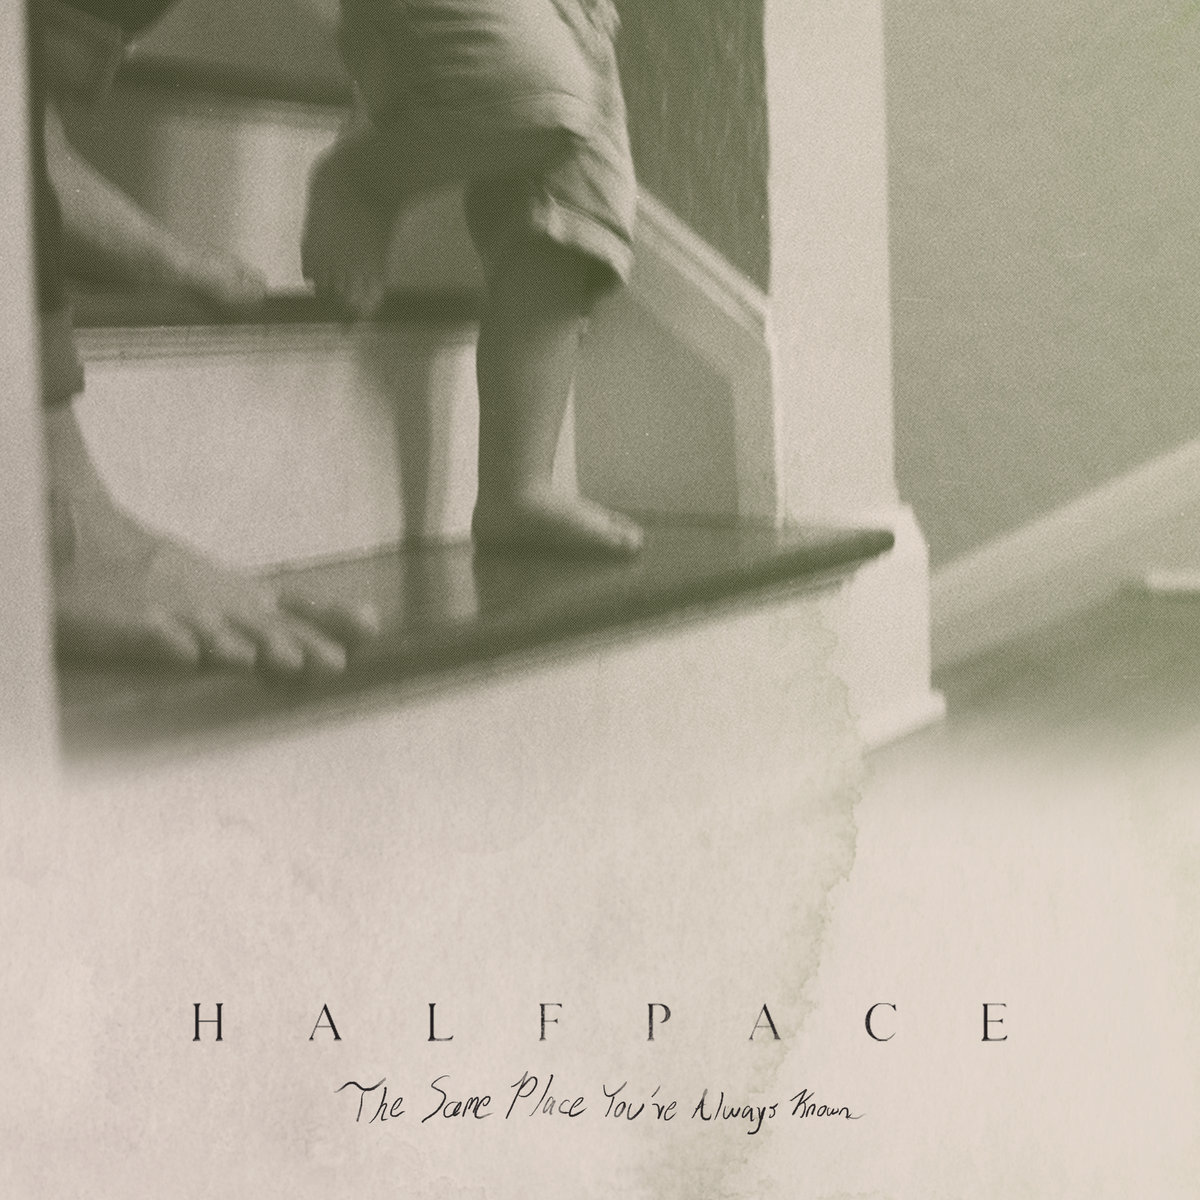 HalfPace